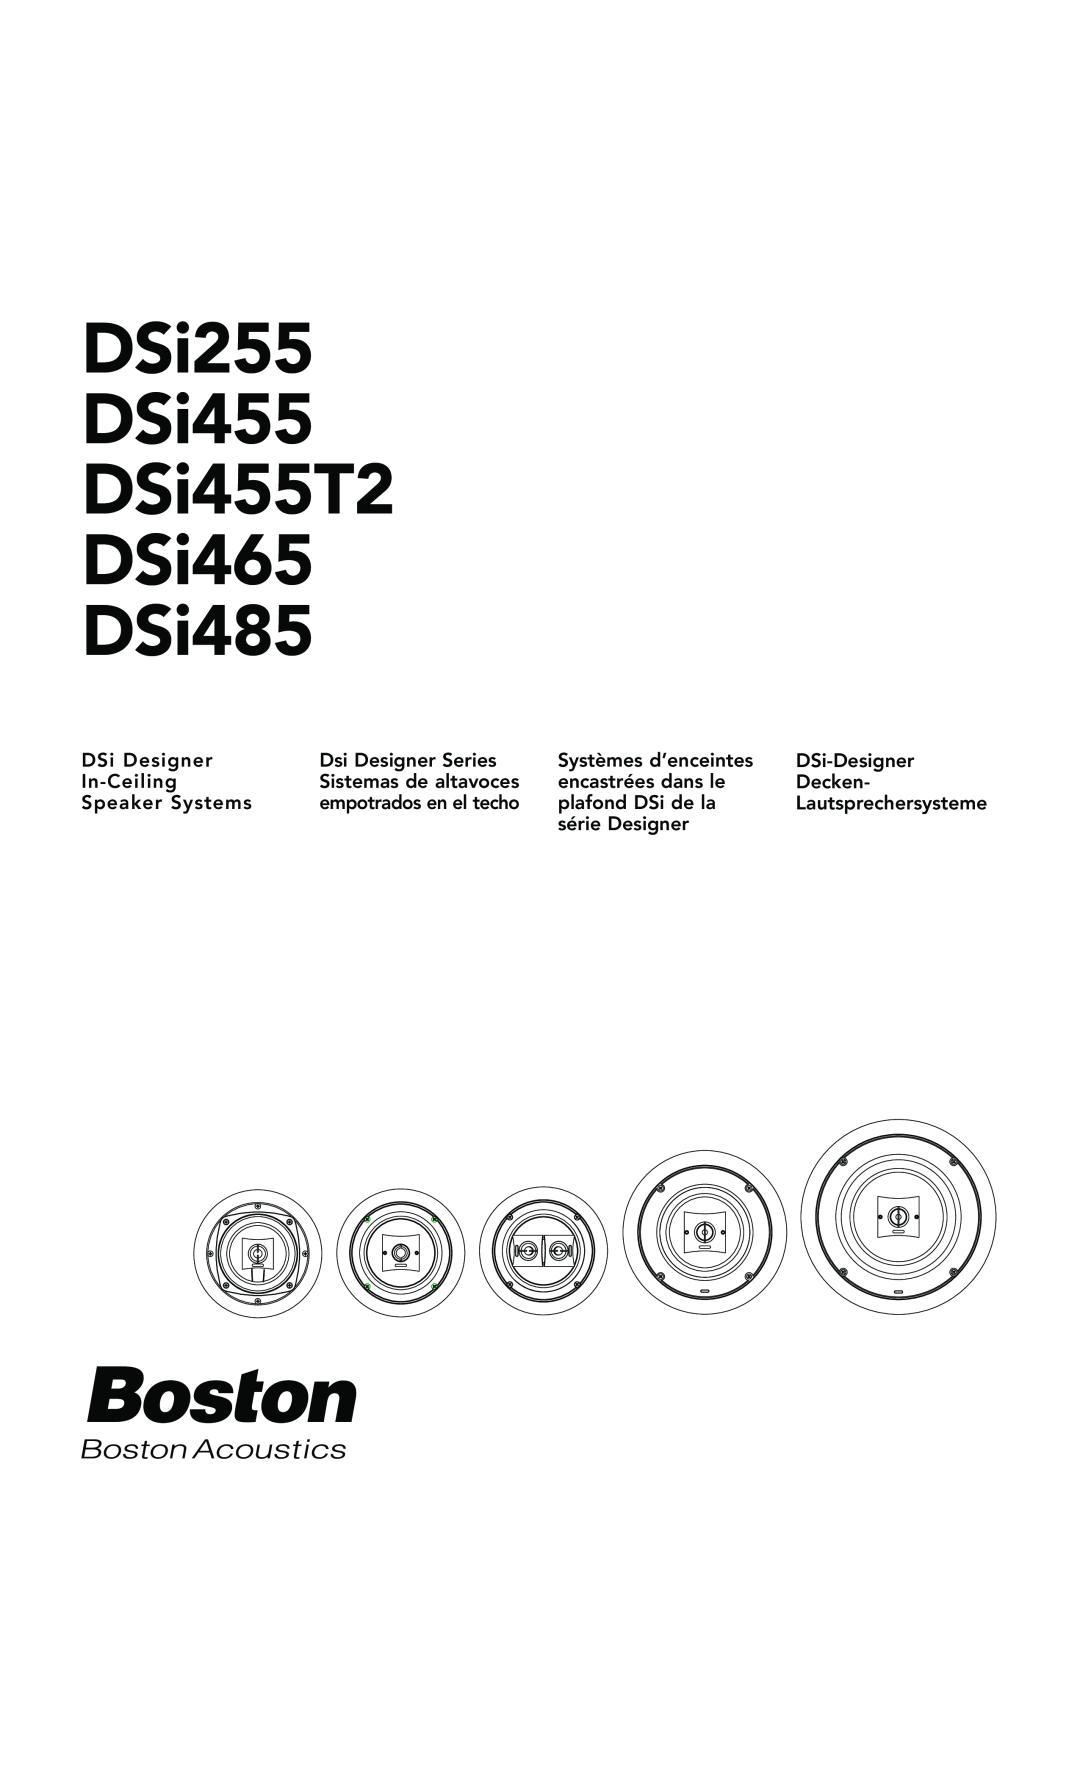 Boston Acoustics manual DSi255 DSi455 DSi455T2 DSi465 DSi485 